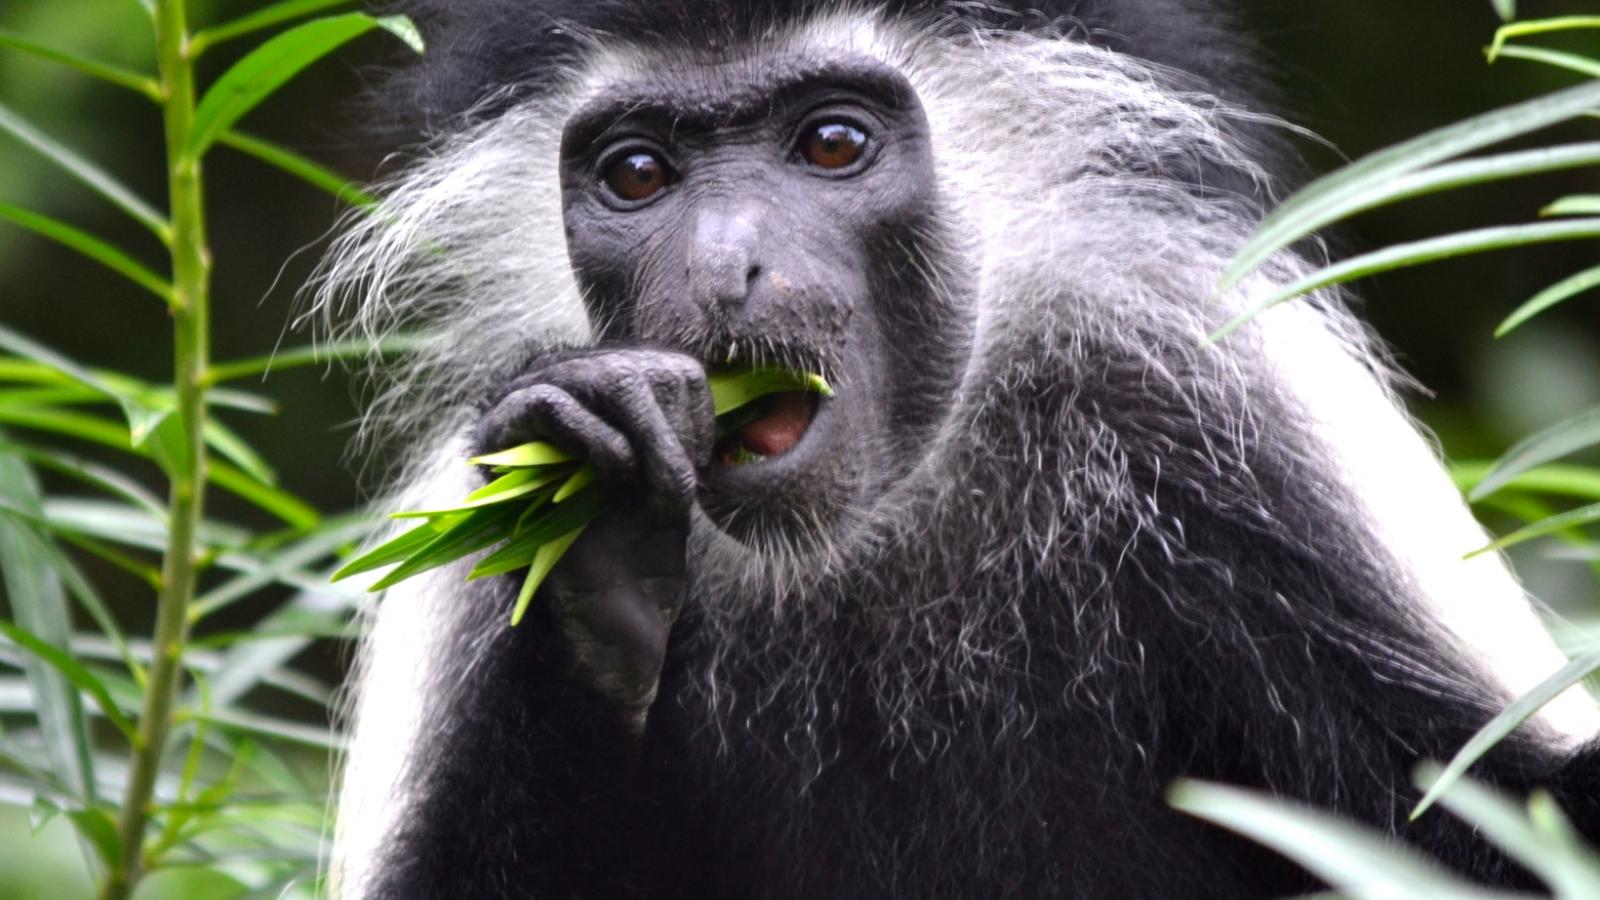 Understanding primate feeding behavior and communication